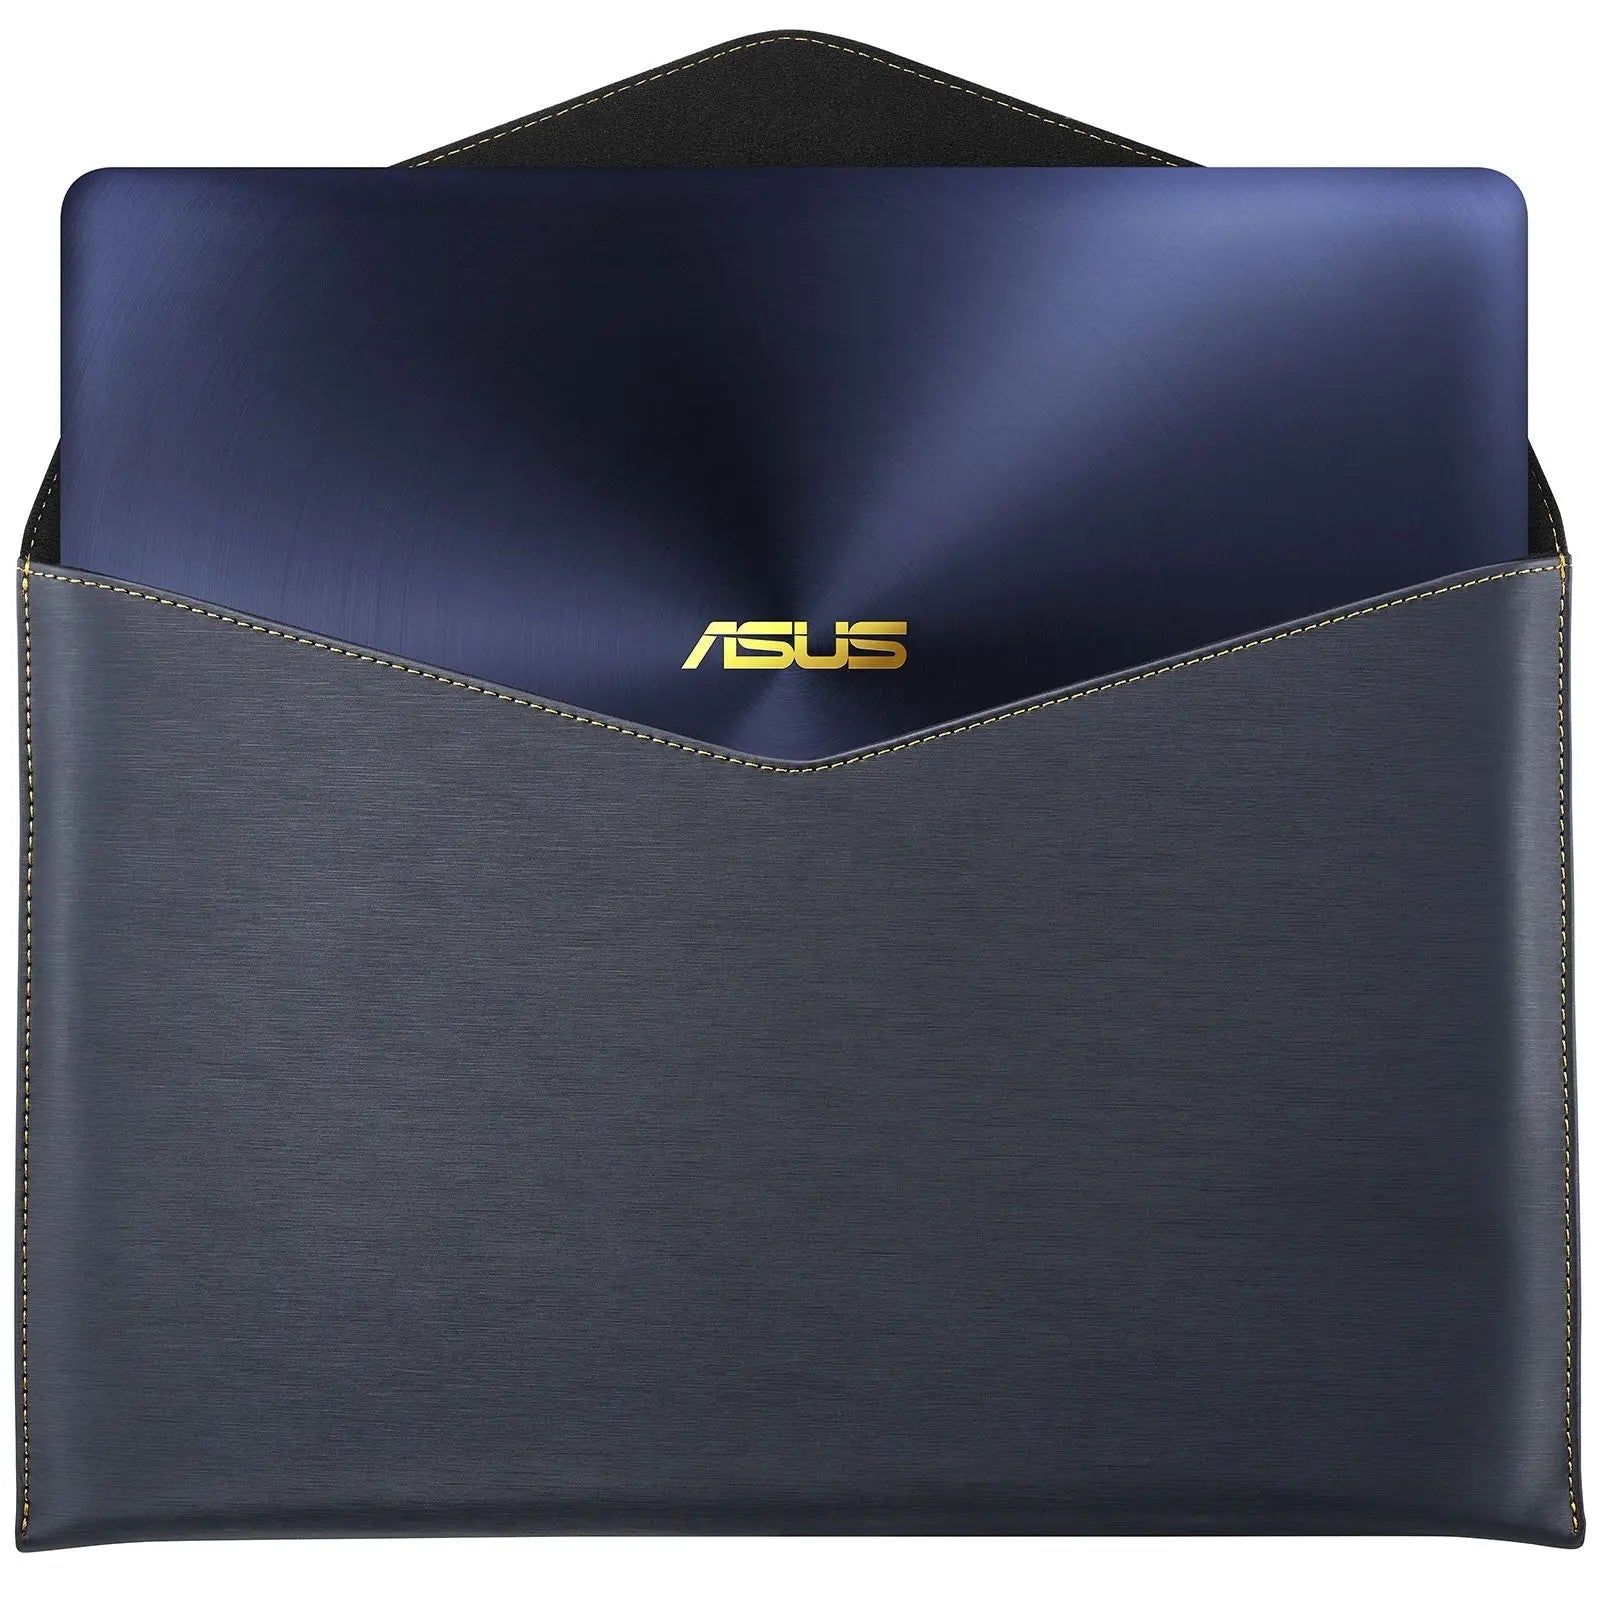 PC portable ULTRABOOK ASUS Zenbook 3 Deluxe 78512E-B newtechno.fr 4712900718256 ASUS